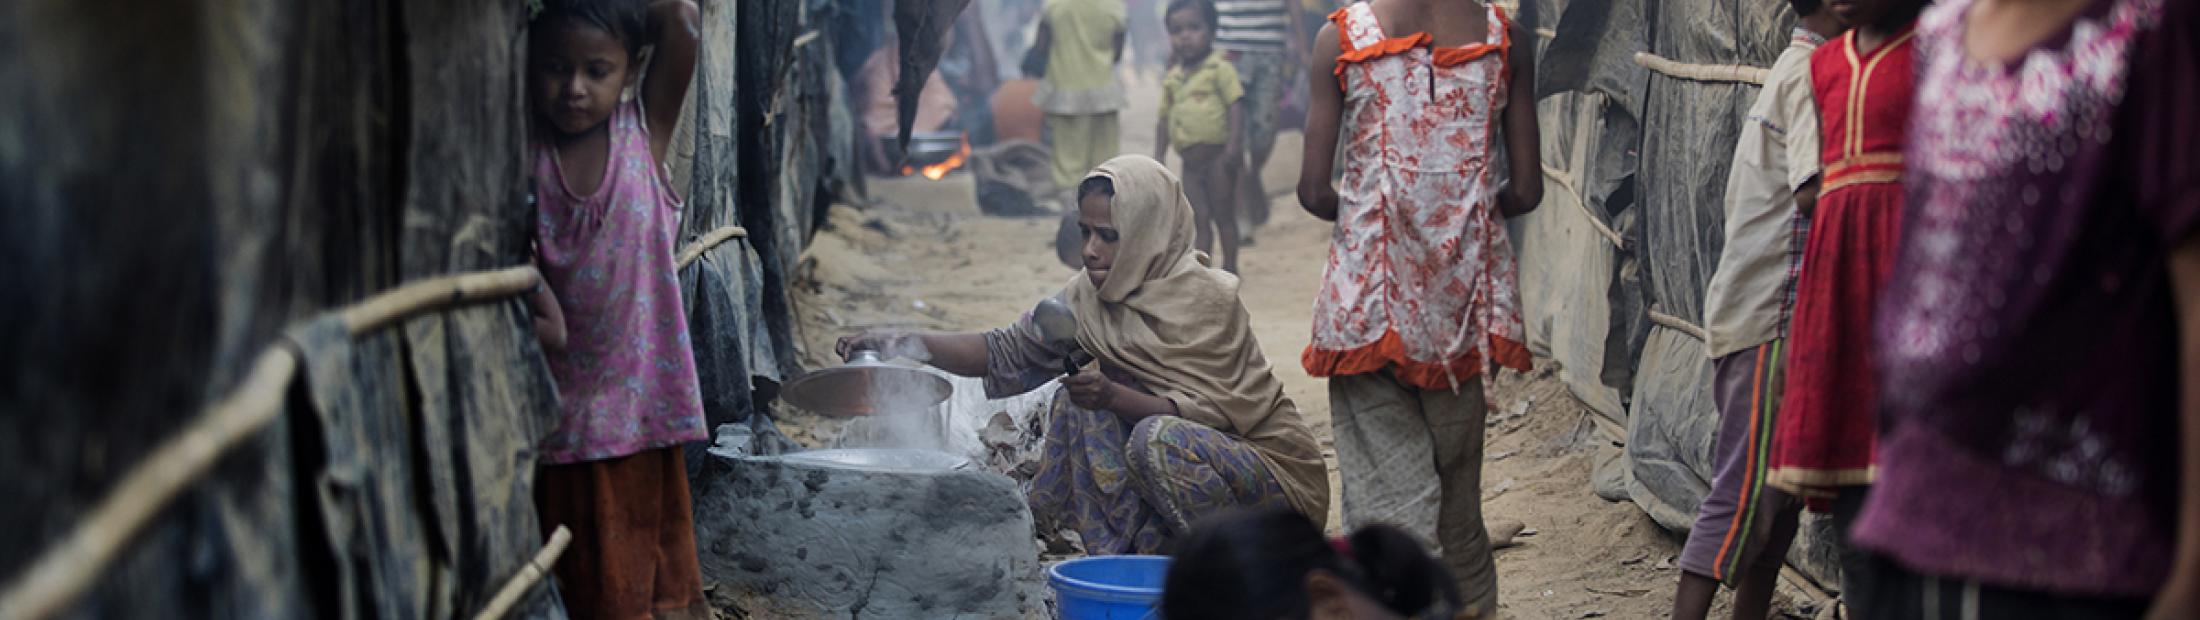 Miles de rohingya huyen a Bangladesh